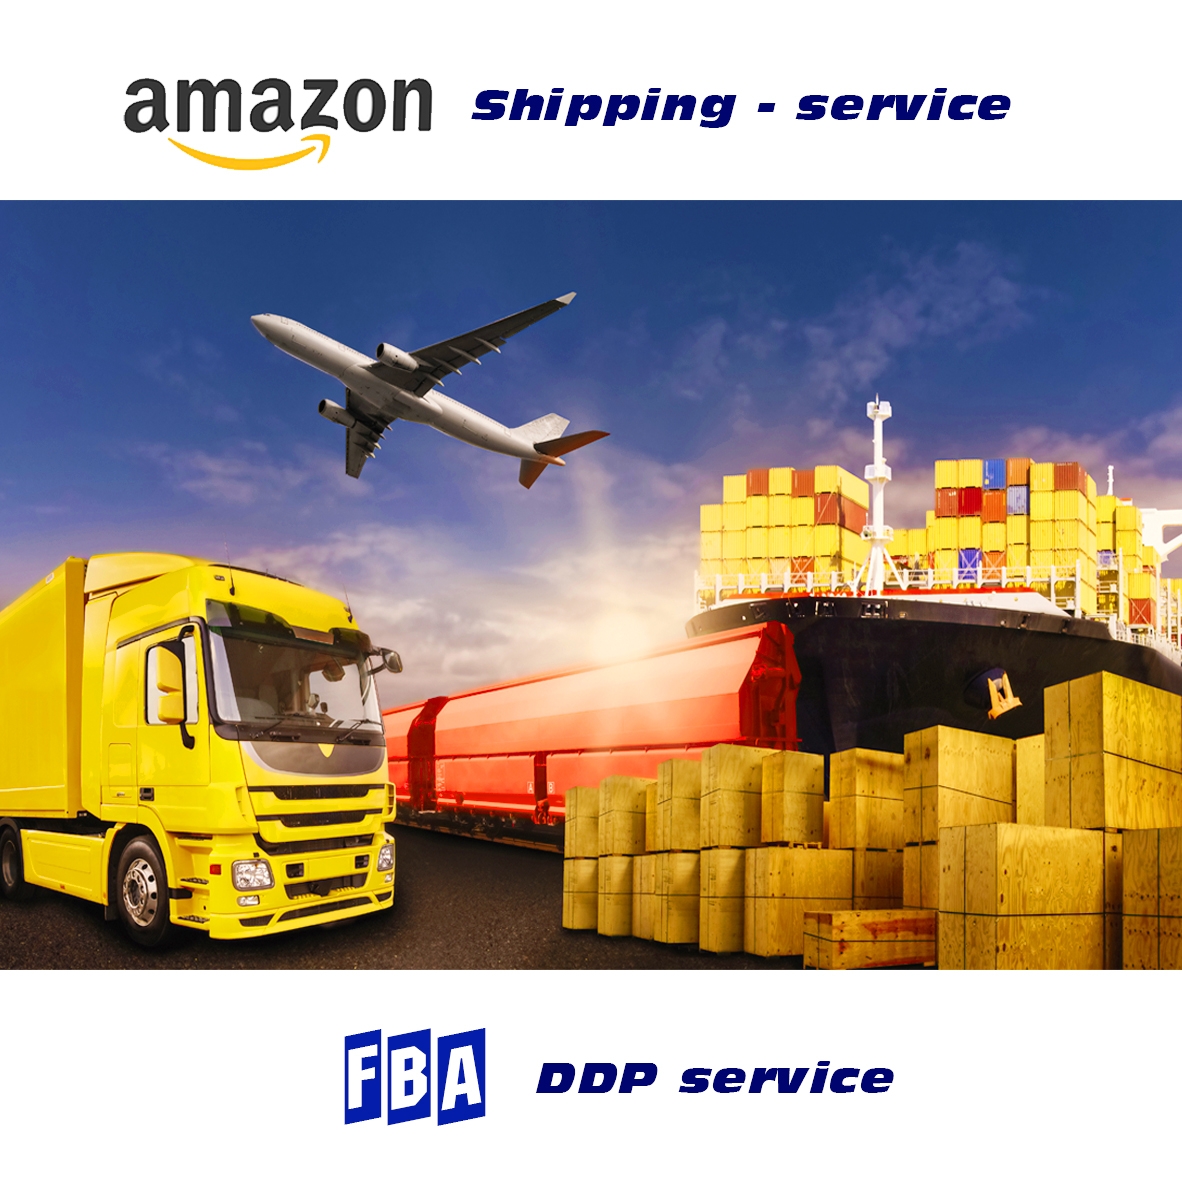 Amazon Shipping Service